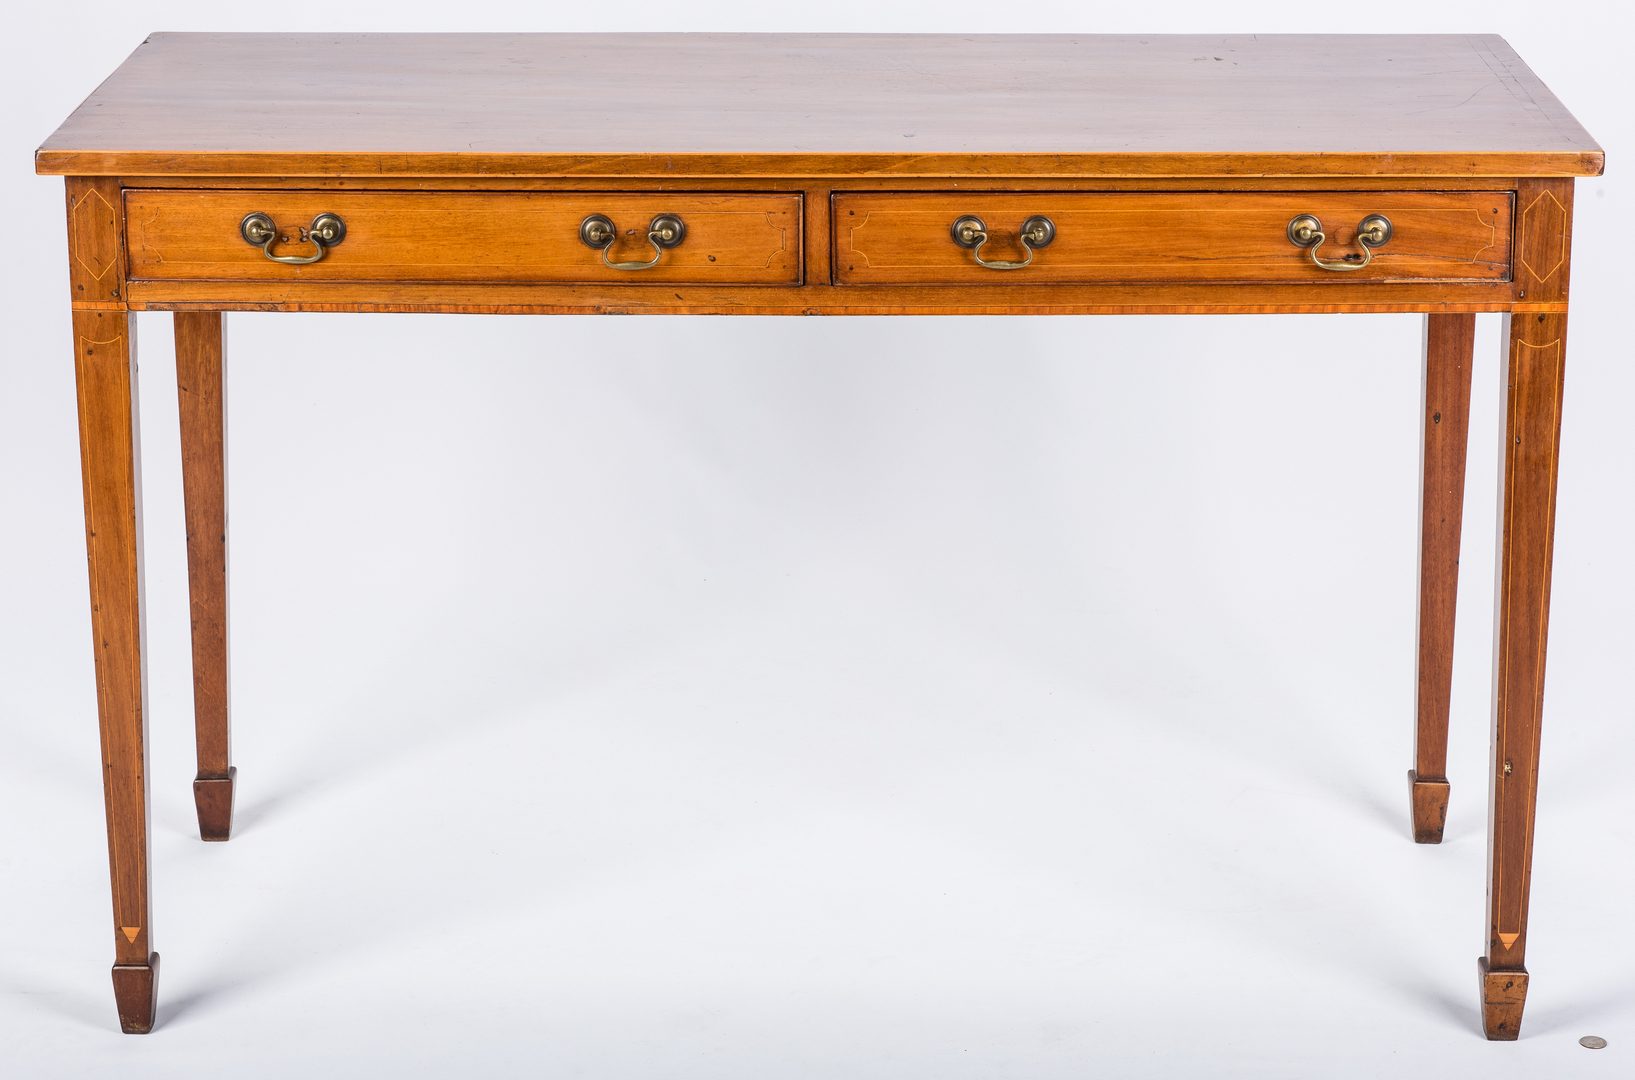 Lot 152: Inlaid sideboard table, circa 1800